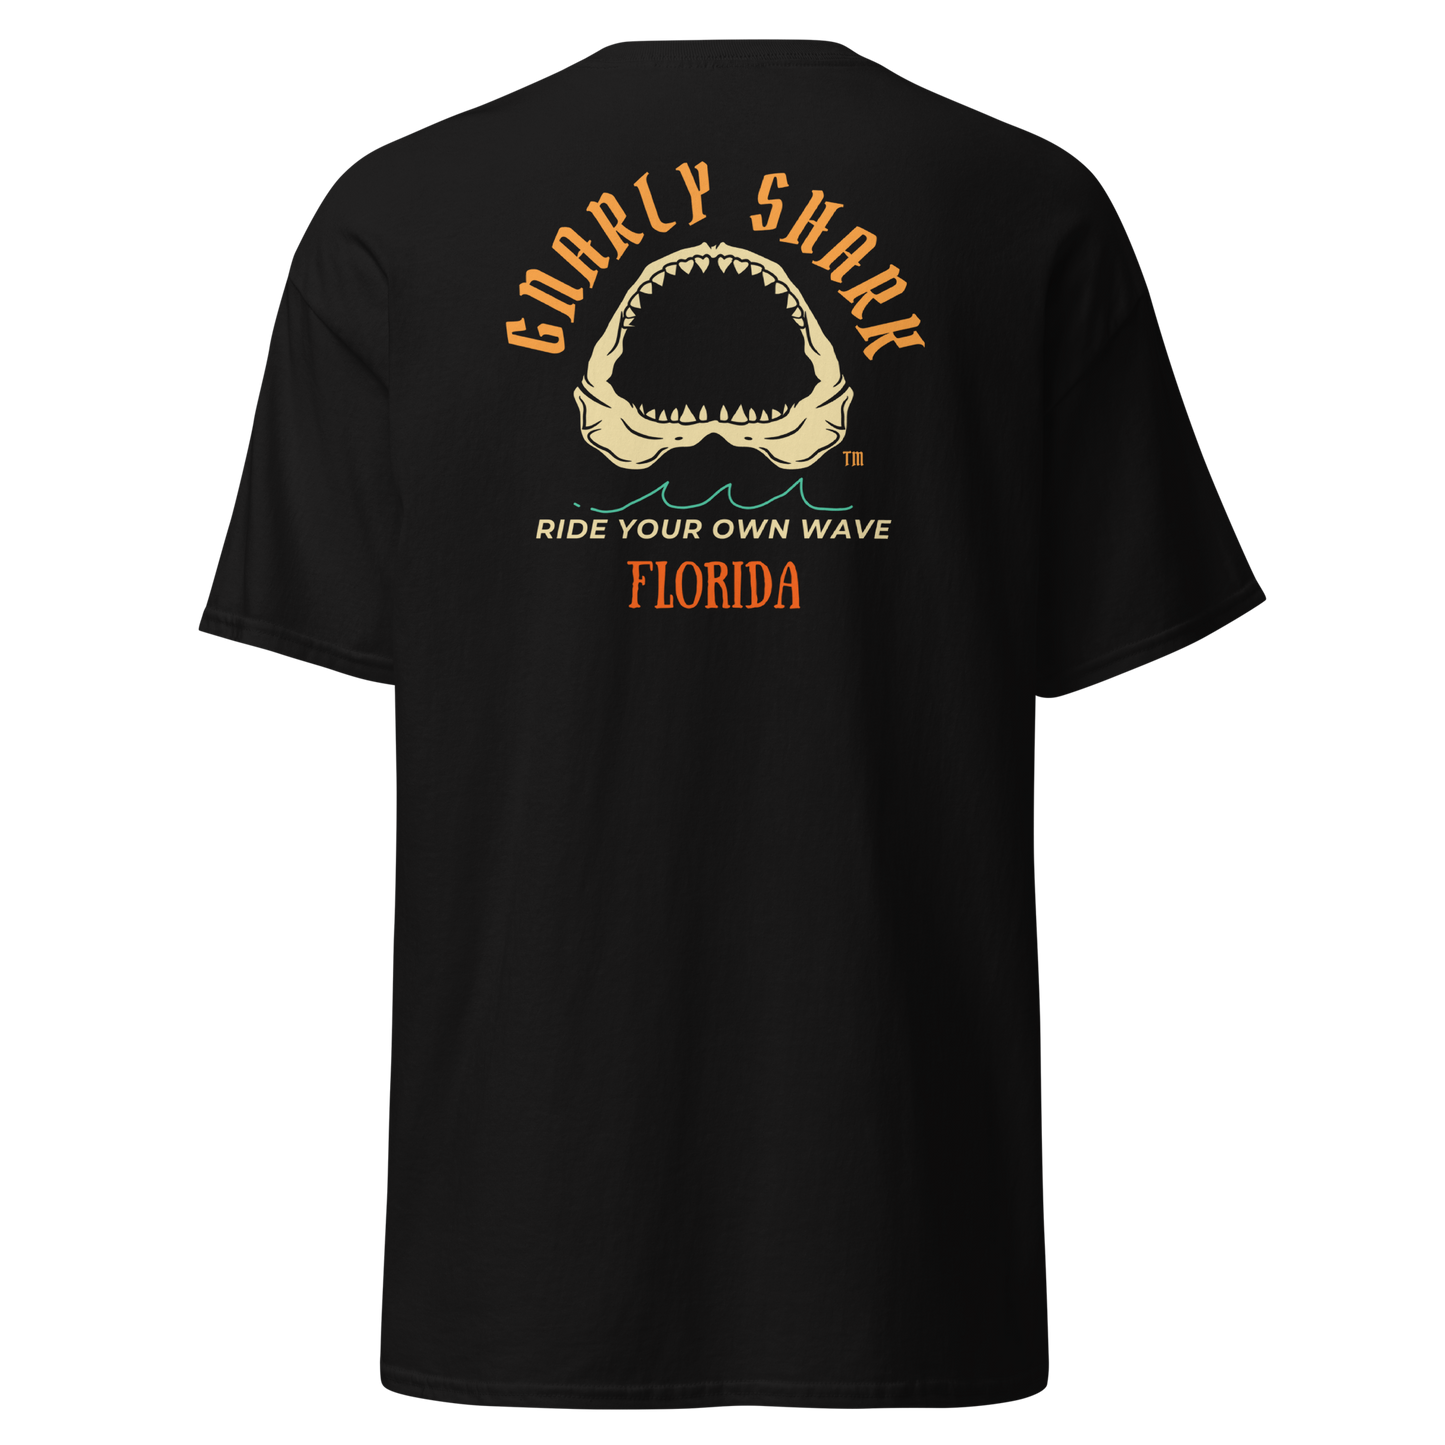 Gnarly Shark Florida T-Shirt - Front / Back - Gildan classic 5000